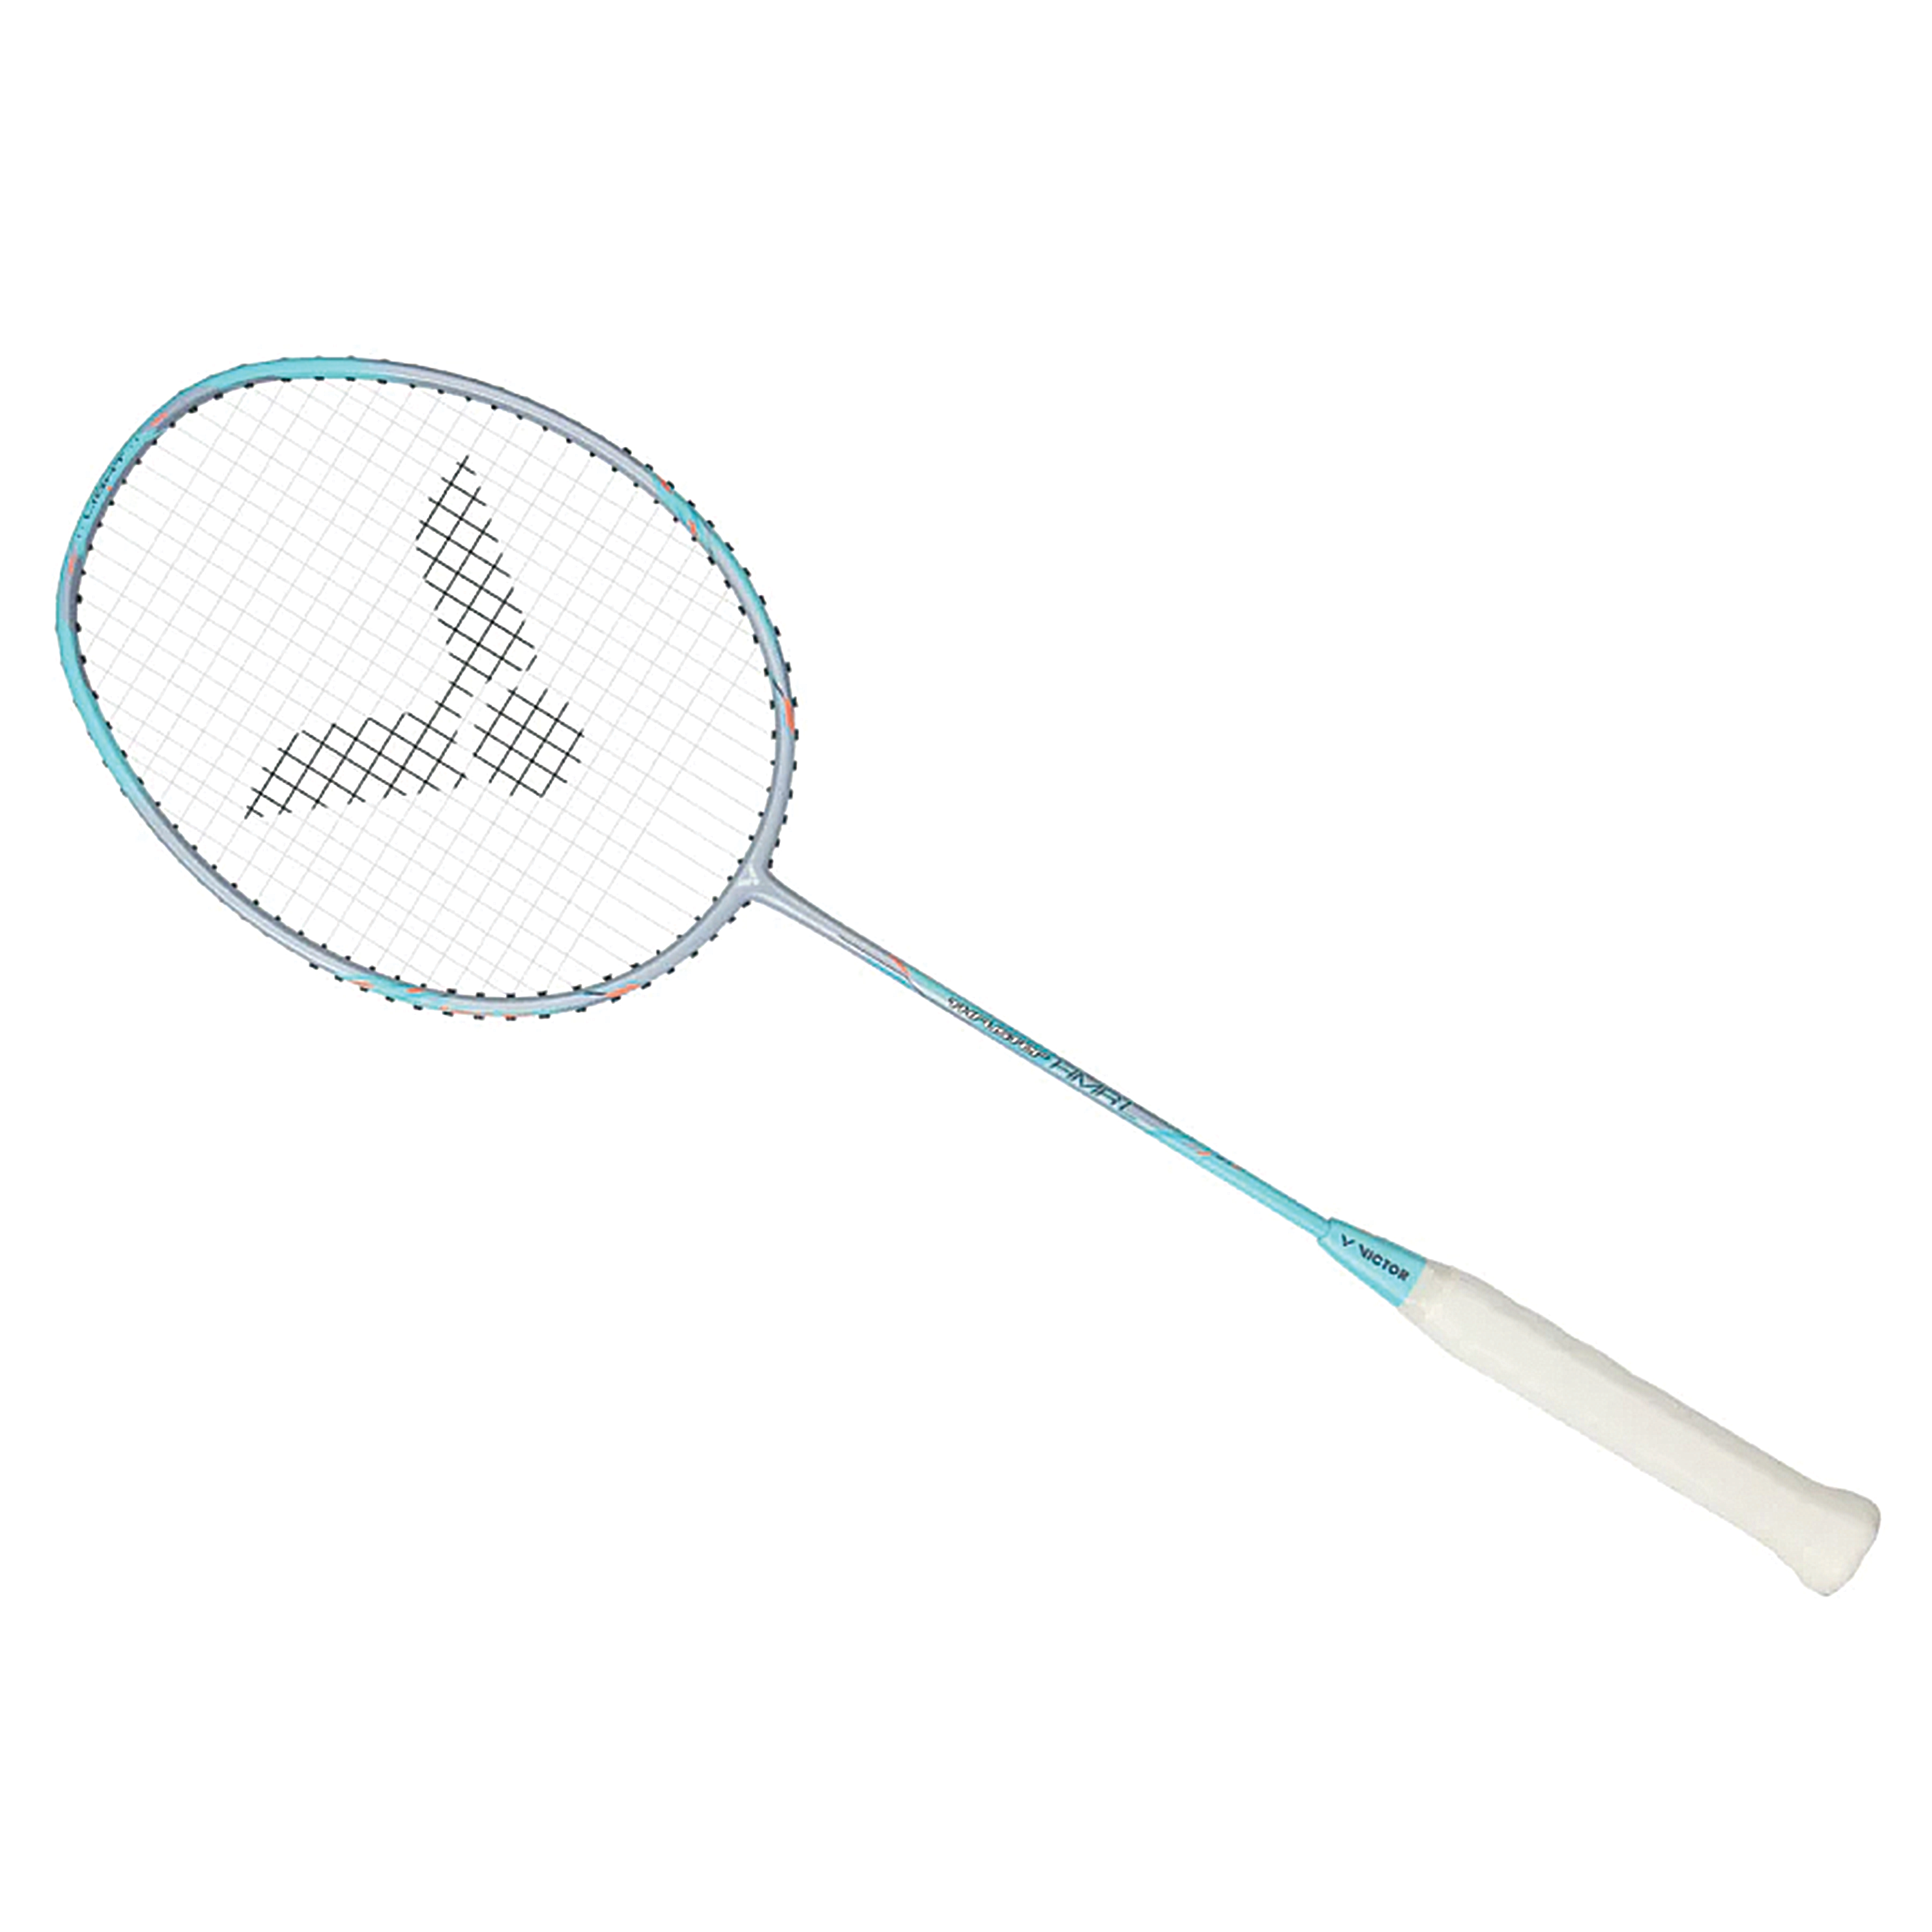 Victor Thruster HMR L U Badminton Racquet 5U(78g)G5